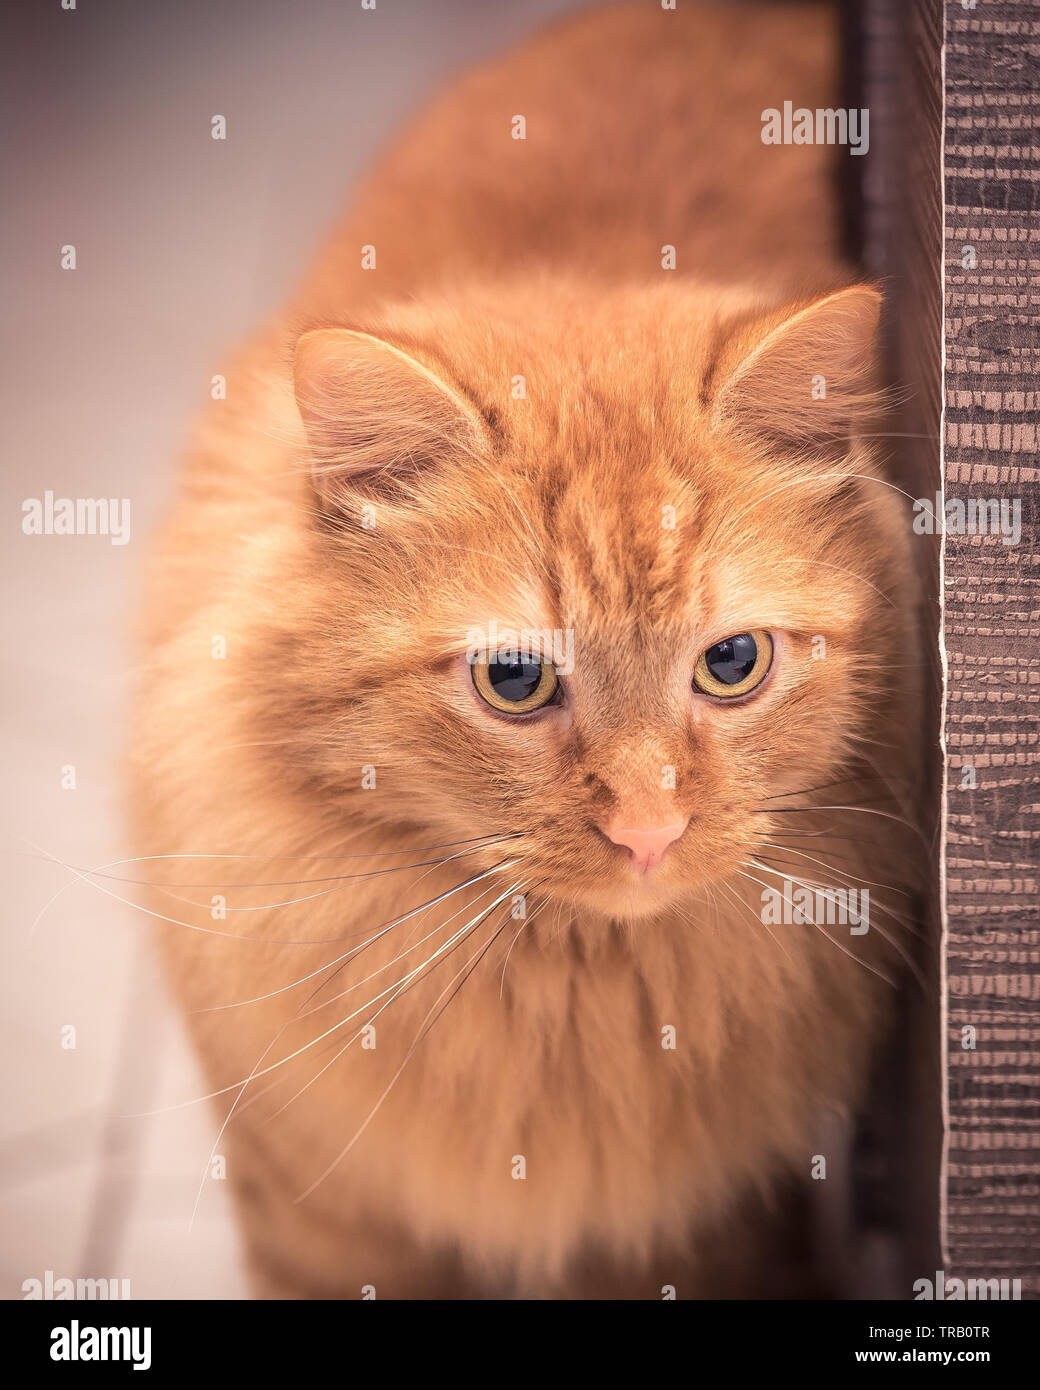 golden tabby cat Stock Photo